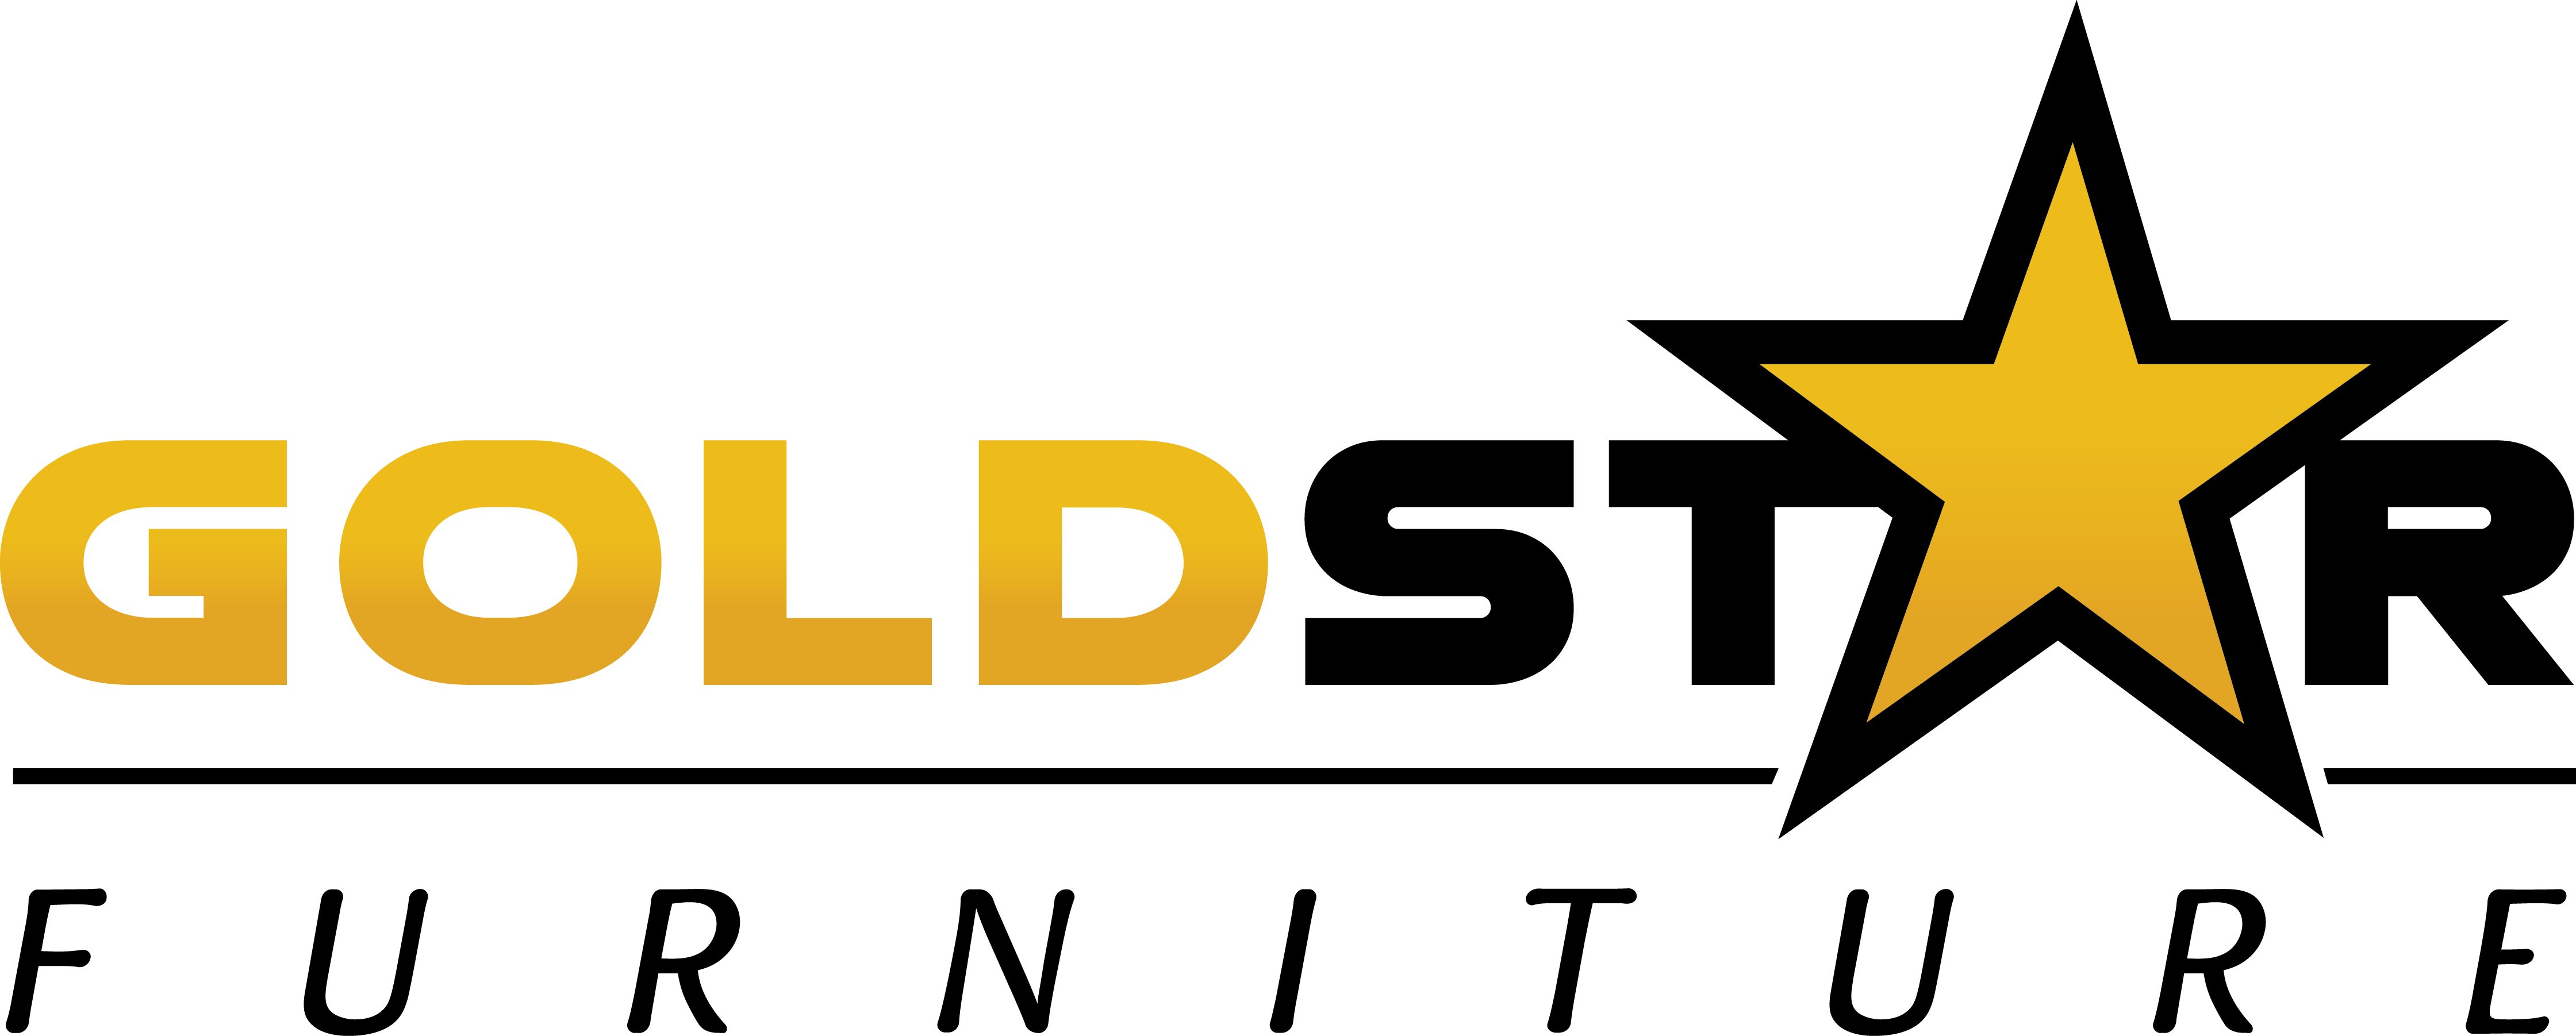 Куплю голд стар. Логотип звезда. GOLDSTAR логотип. Star логотип золото. Золотая звезда логотип.